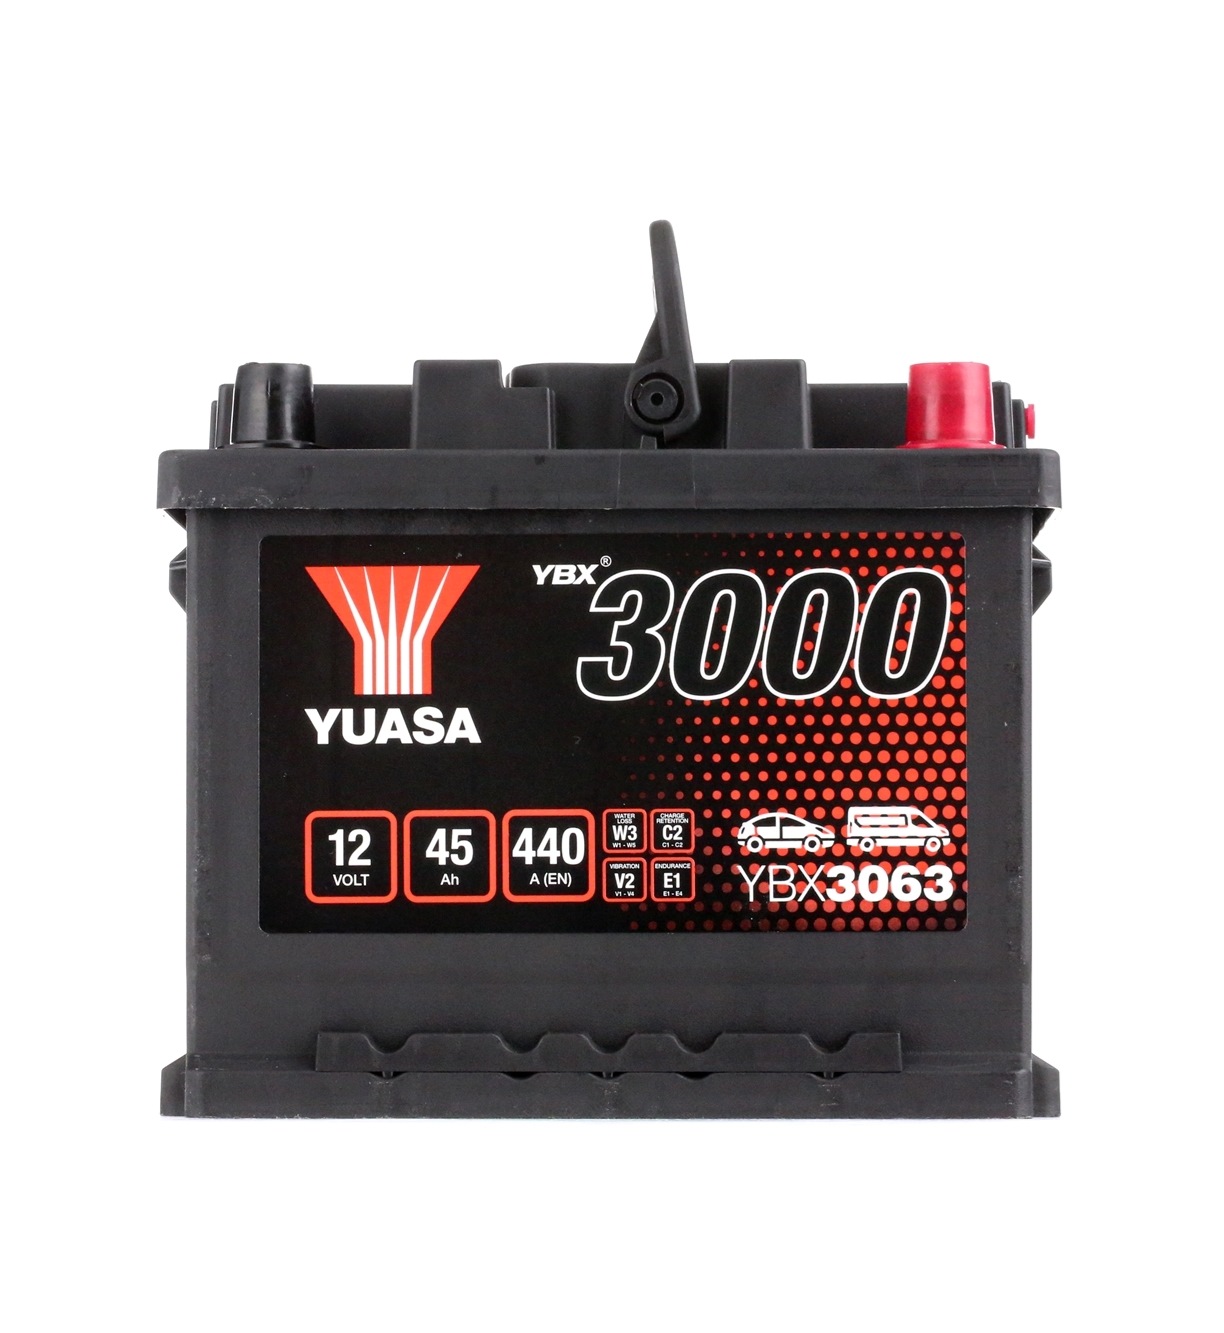 YUASA Autobatterie Audi YBX3063 in Original Qualität